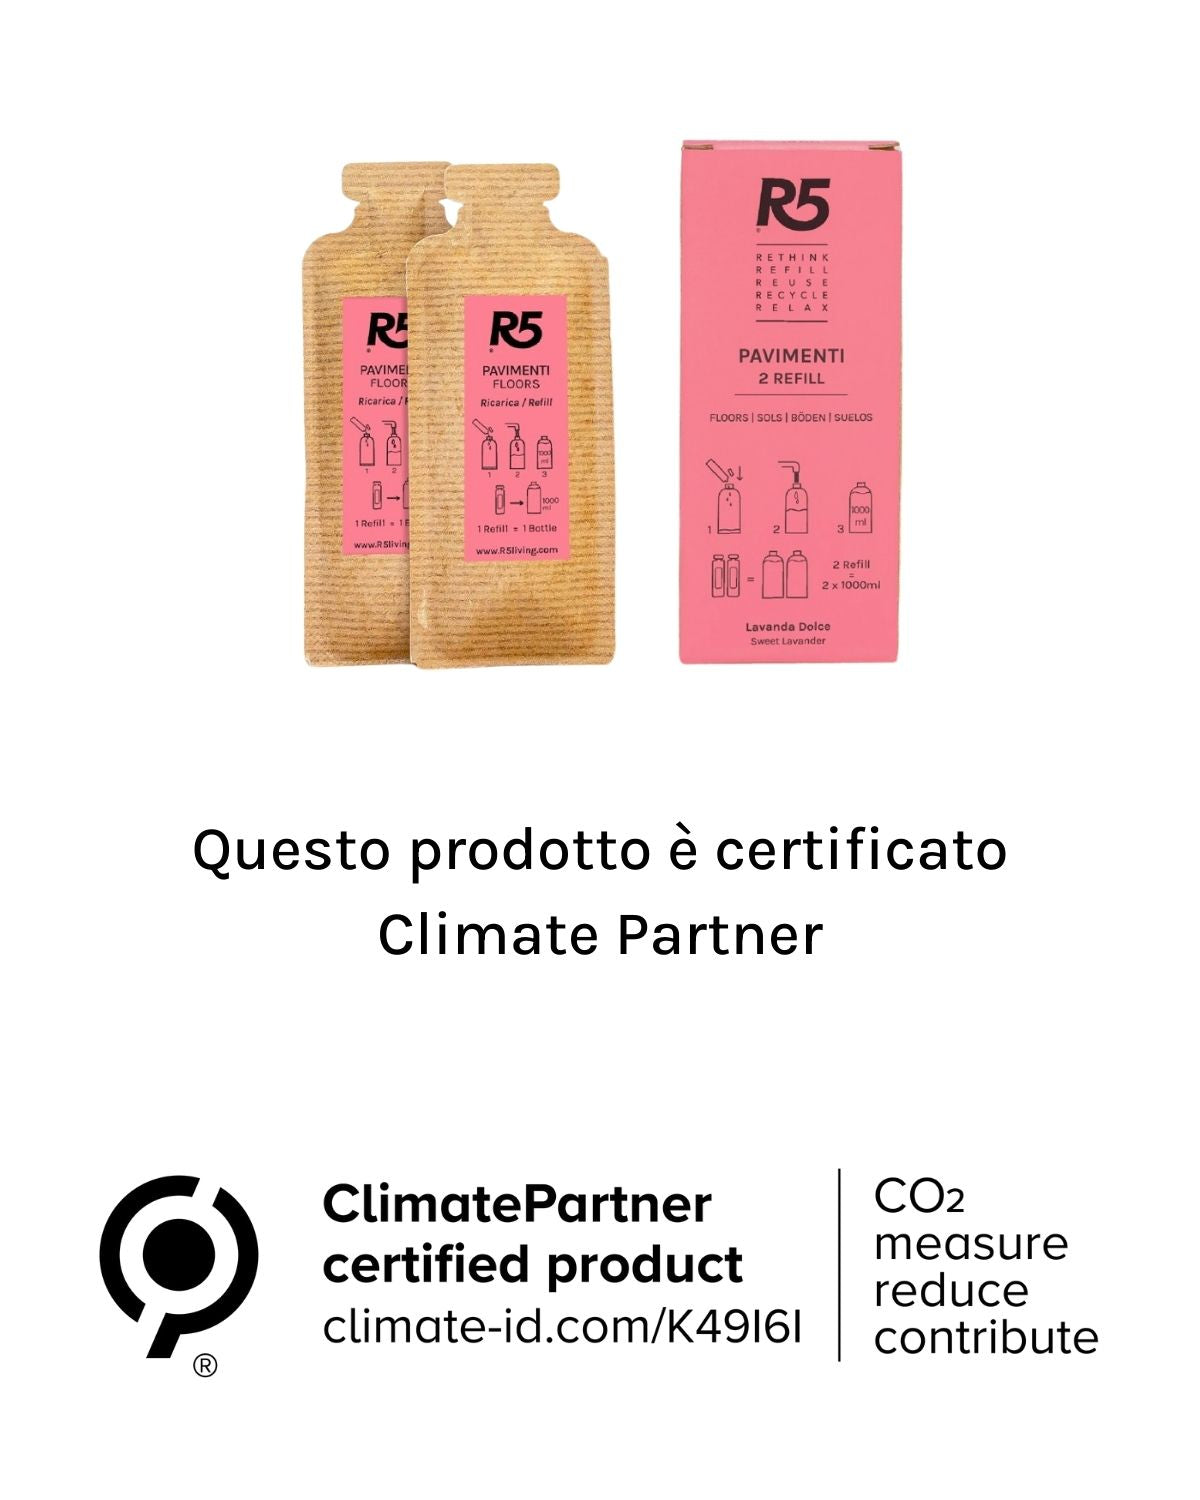 Climate Partner certified refill pavimenti